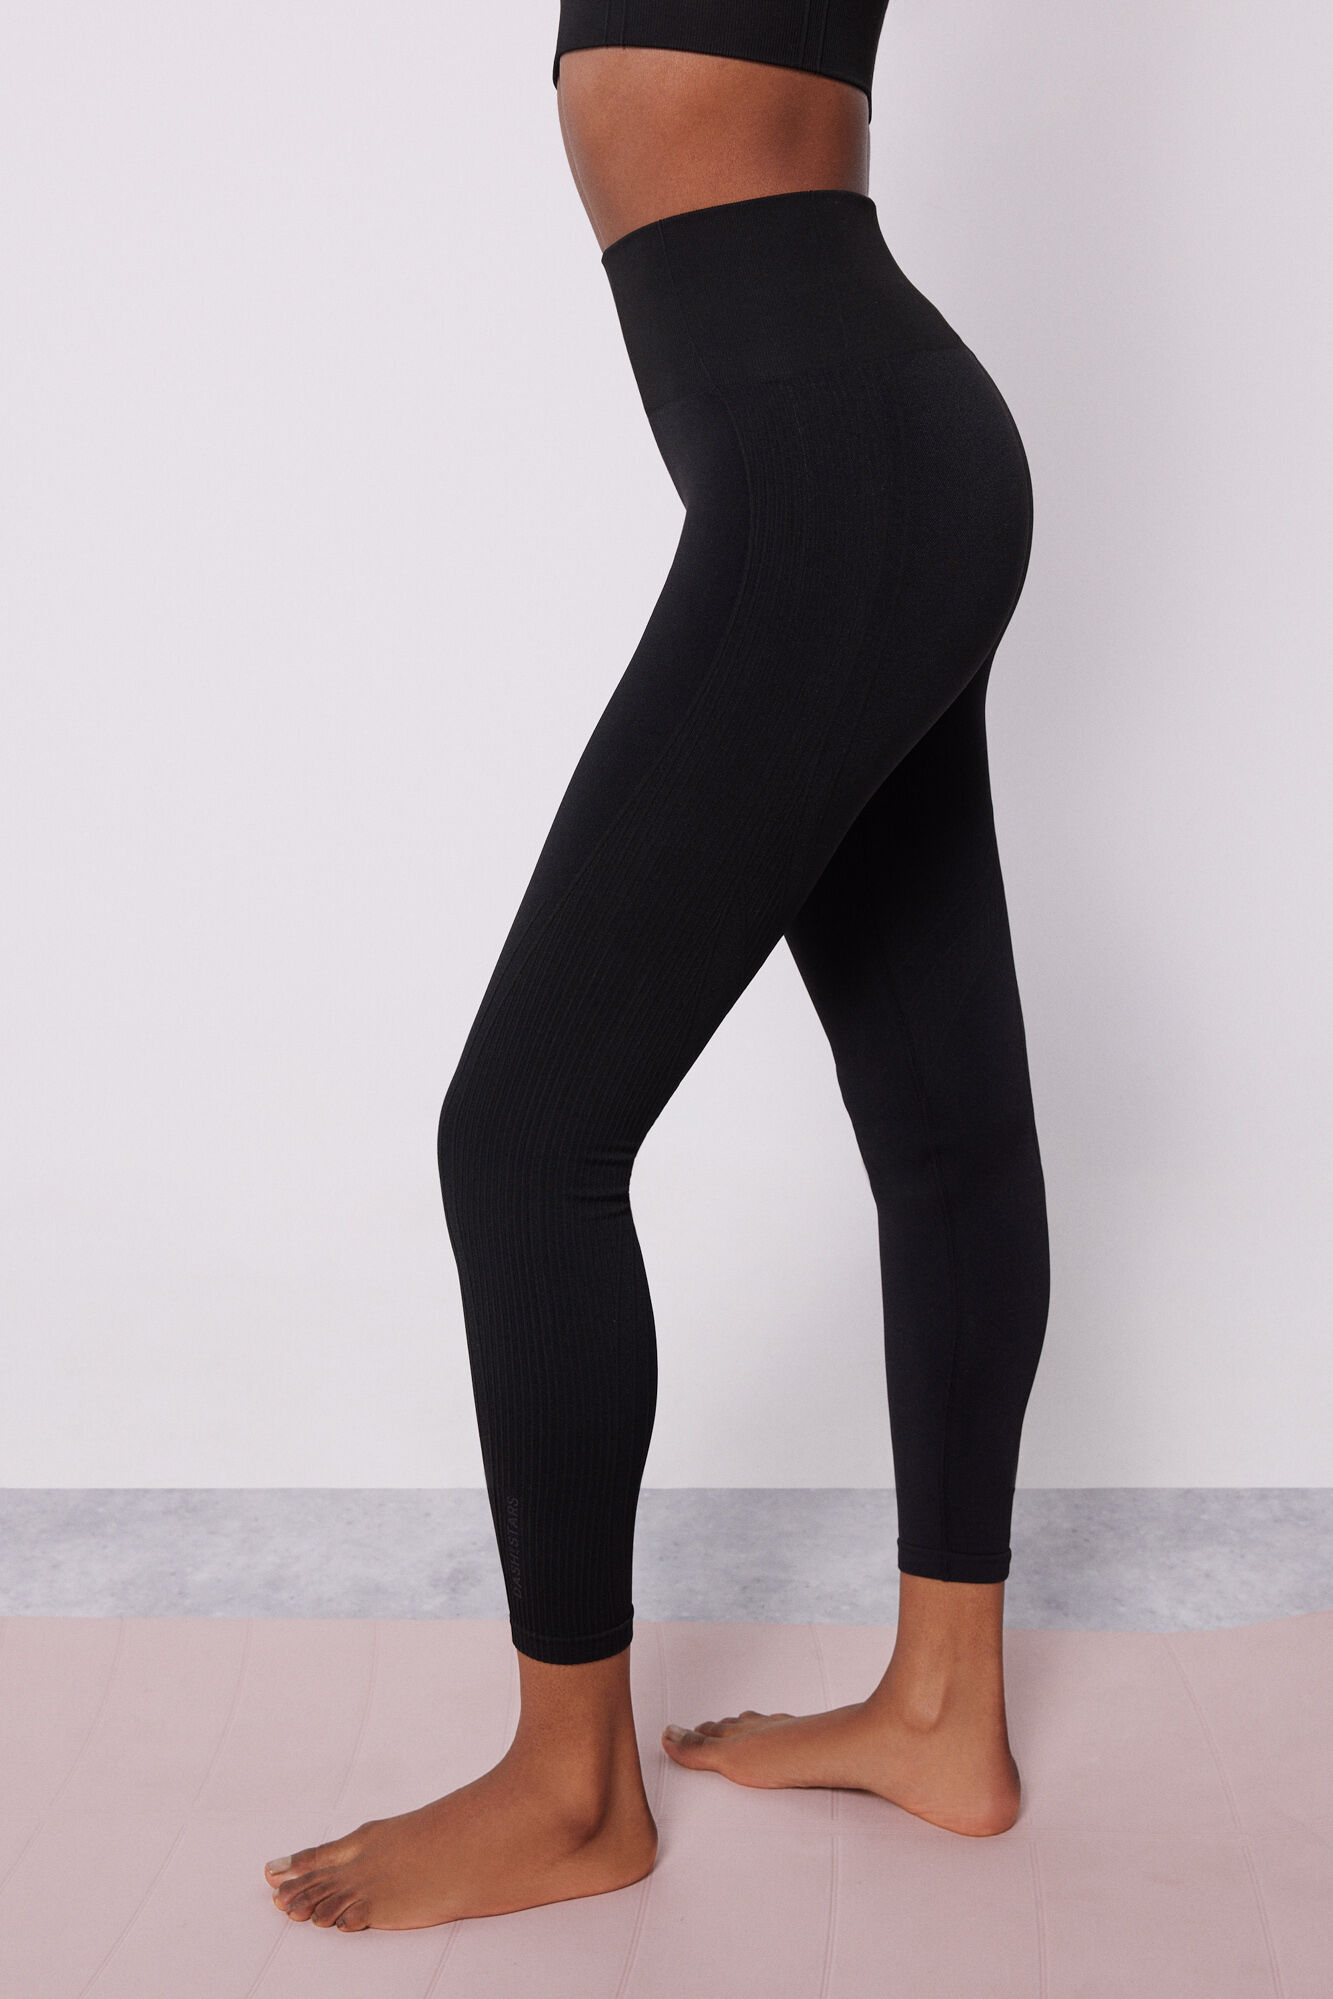 Dropship Women TIK Tok Leggings Bubble Textured Butt Lifting Yoga Pants  Black Large to Sell Online at a Lower Price | Doba